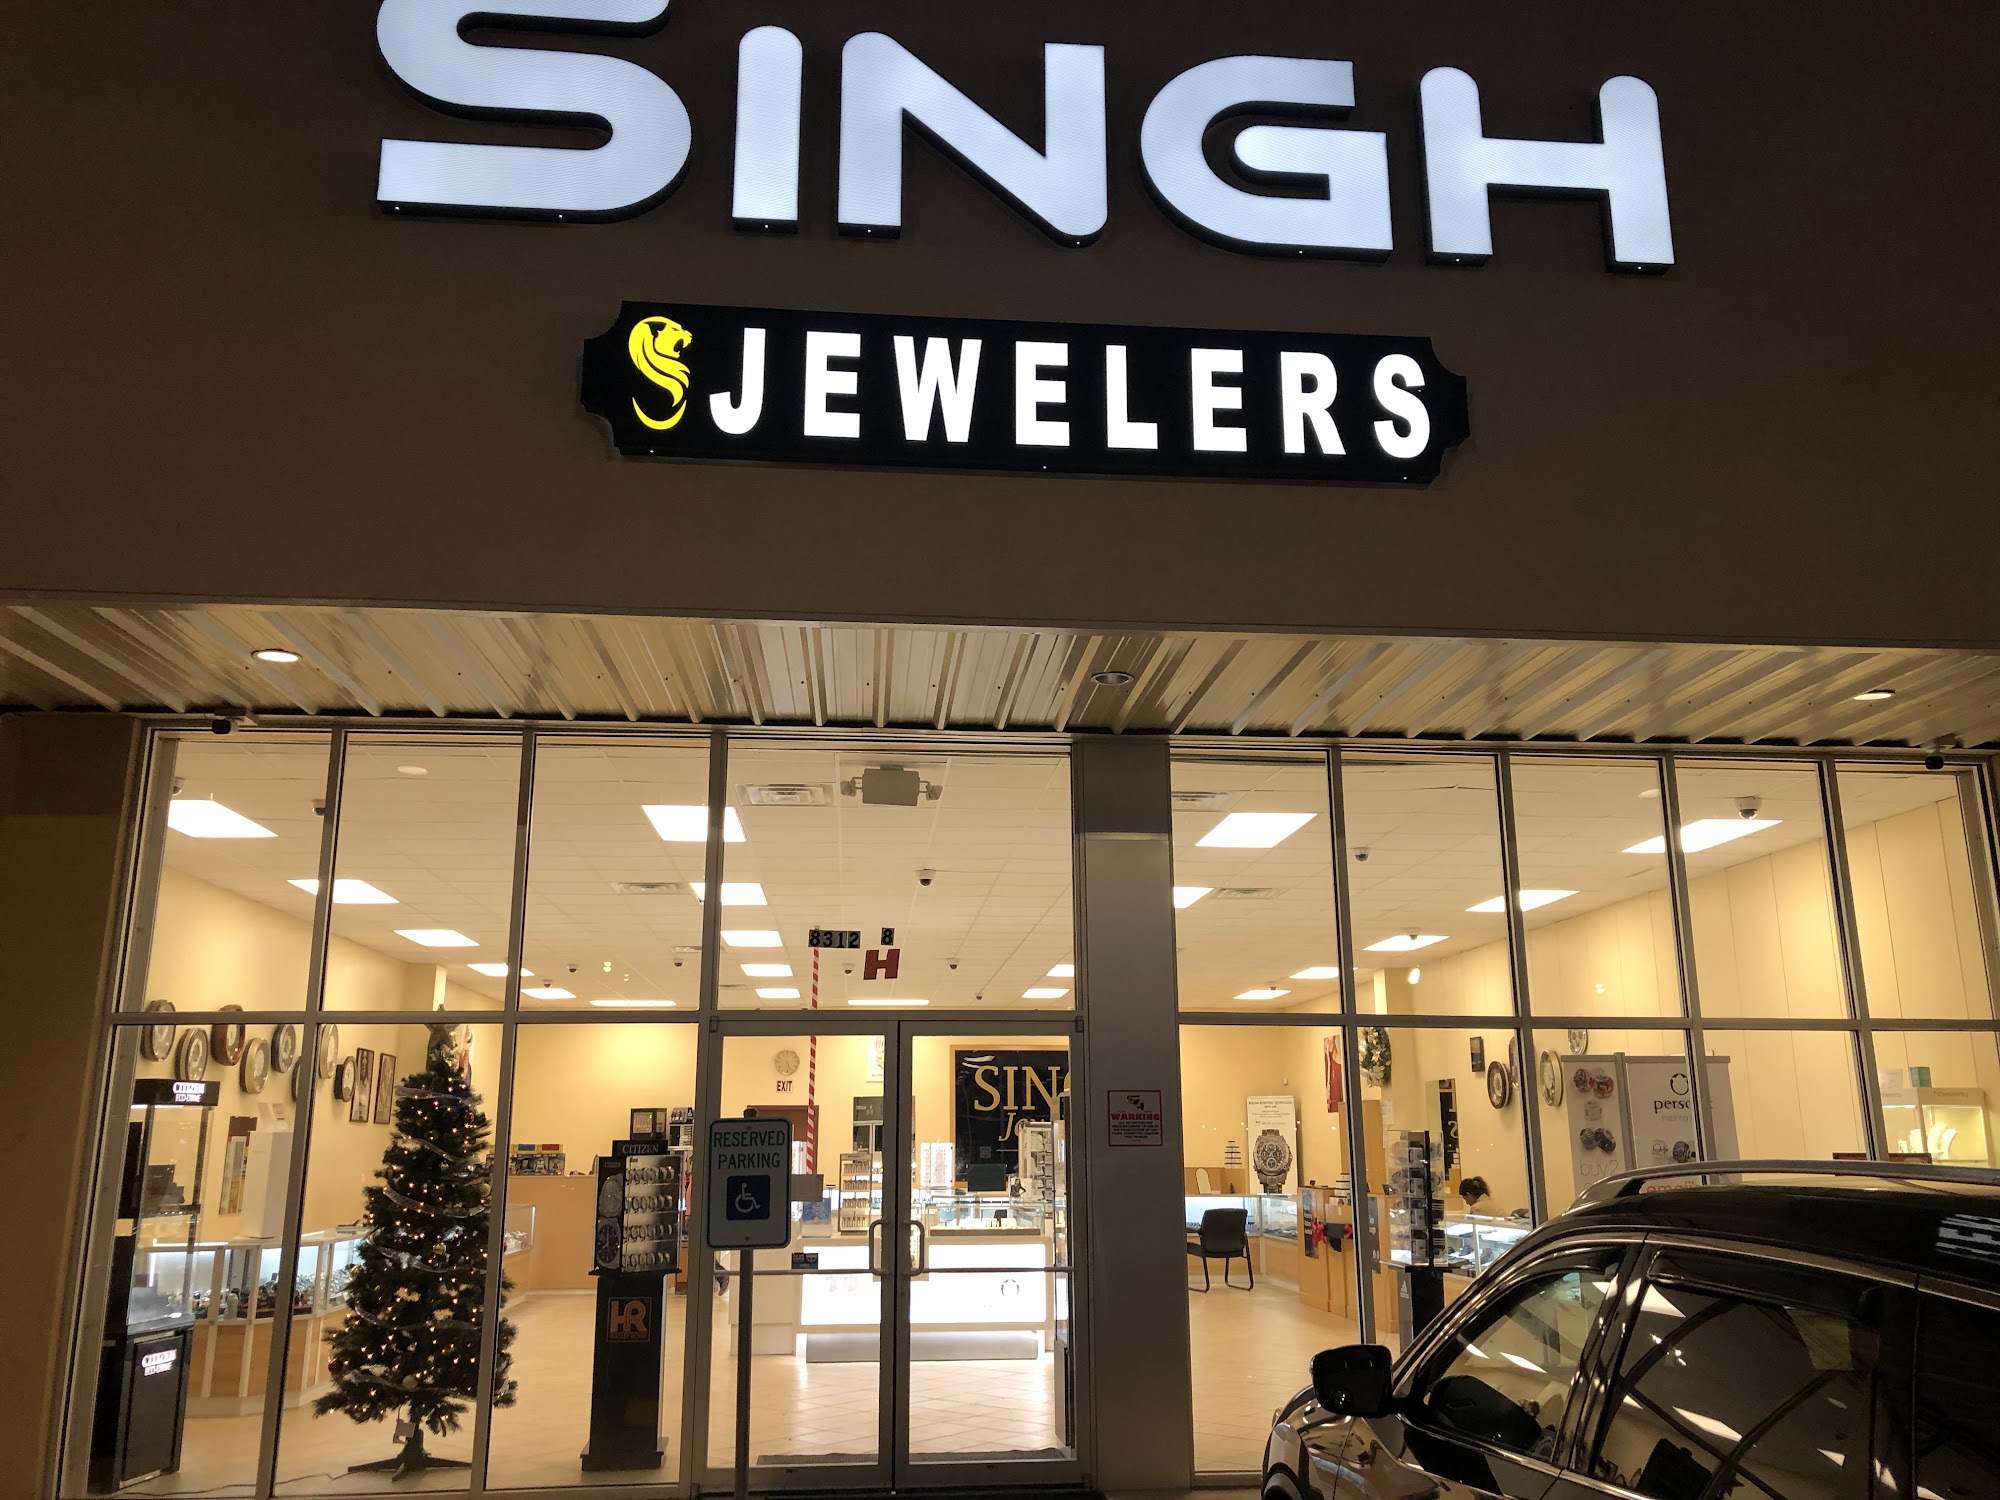 Singh Jewelers